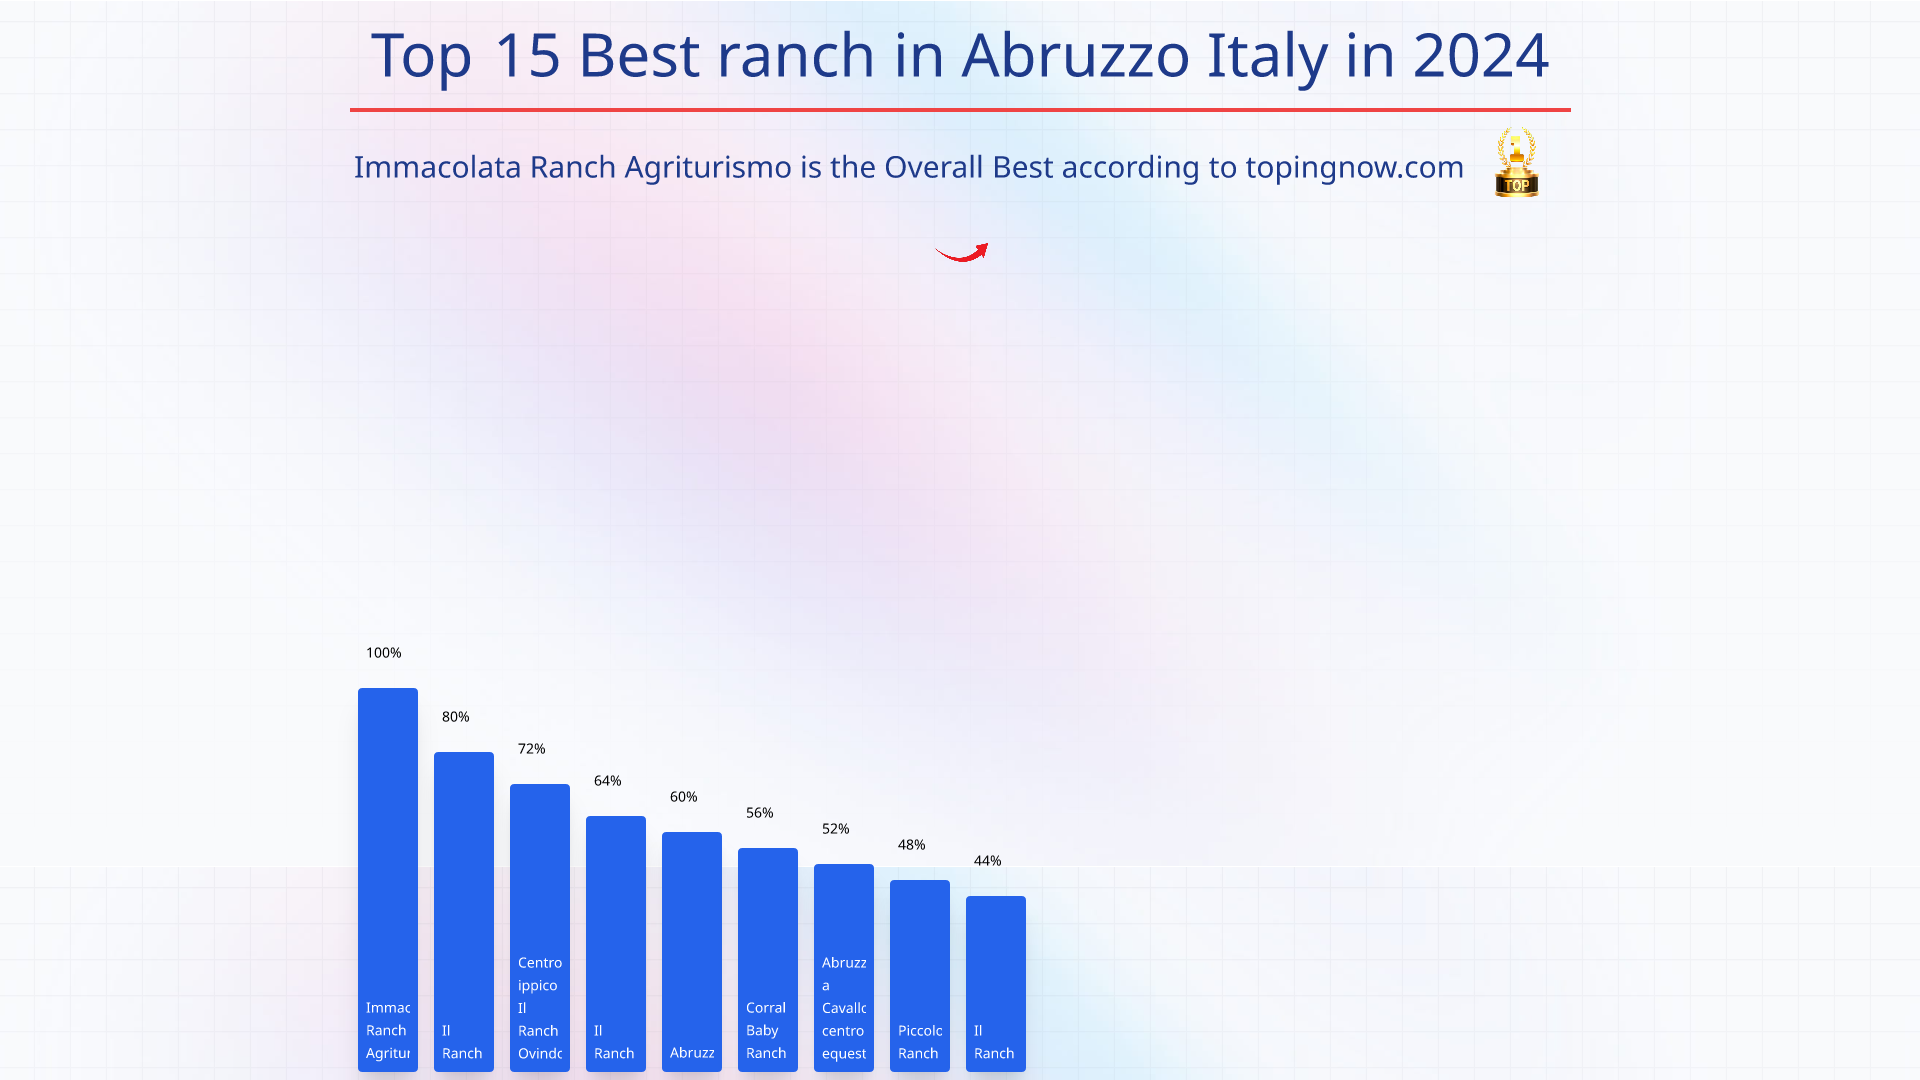 Top 15 Best ranch in Abruzzo Italy in 2024: Top 15 Best ranch in Abruzzo Italy in 2024